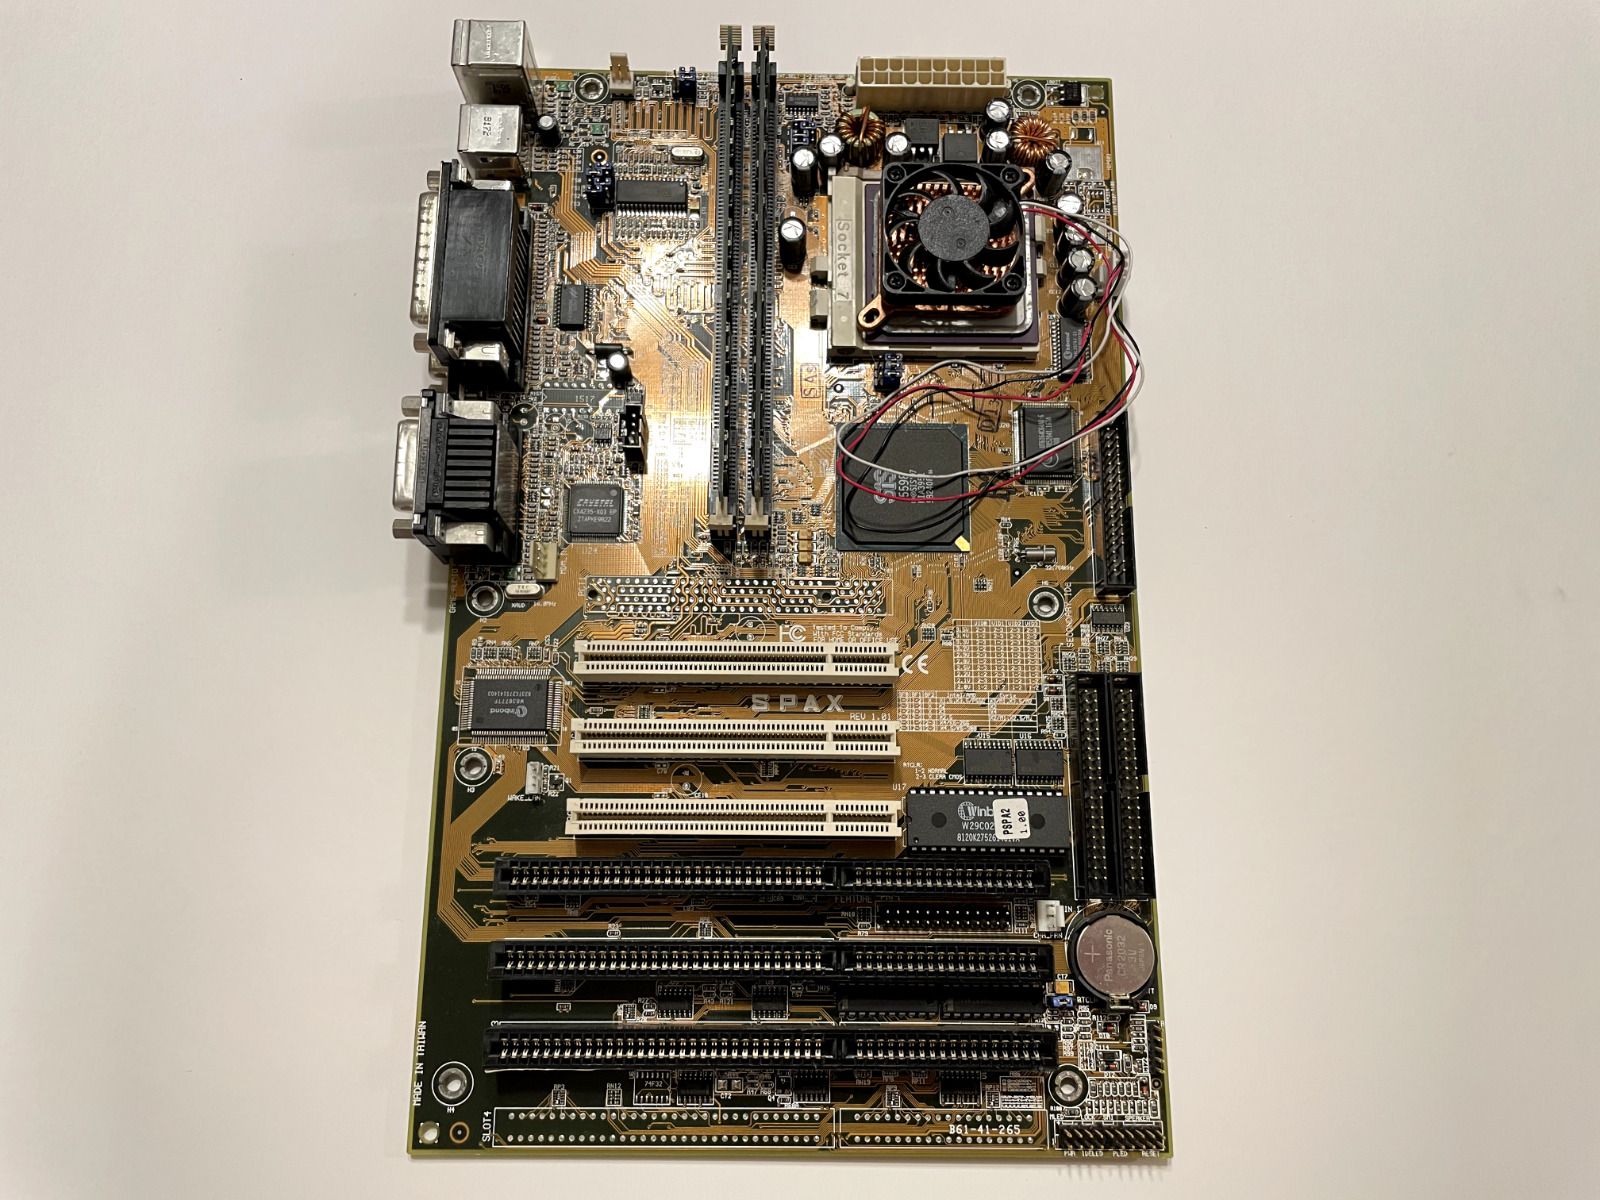 HP ASUS SPAX Motherboard ATX Socket 7 AMD K6 300MHz 48MB Ram - TESTED